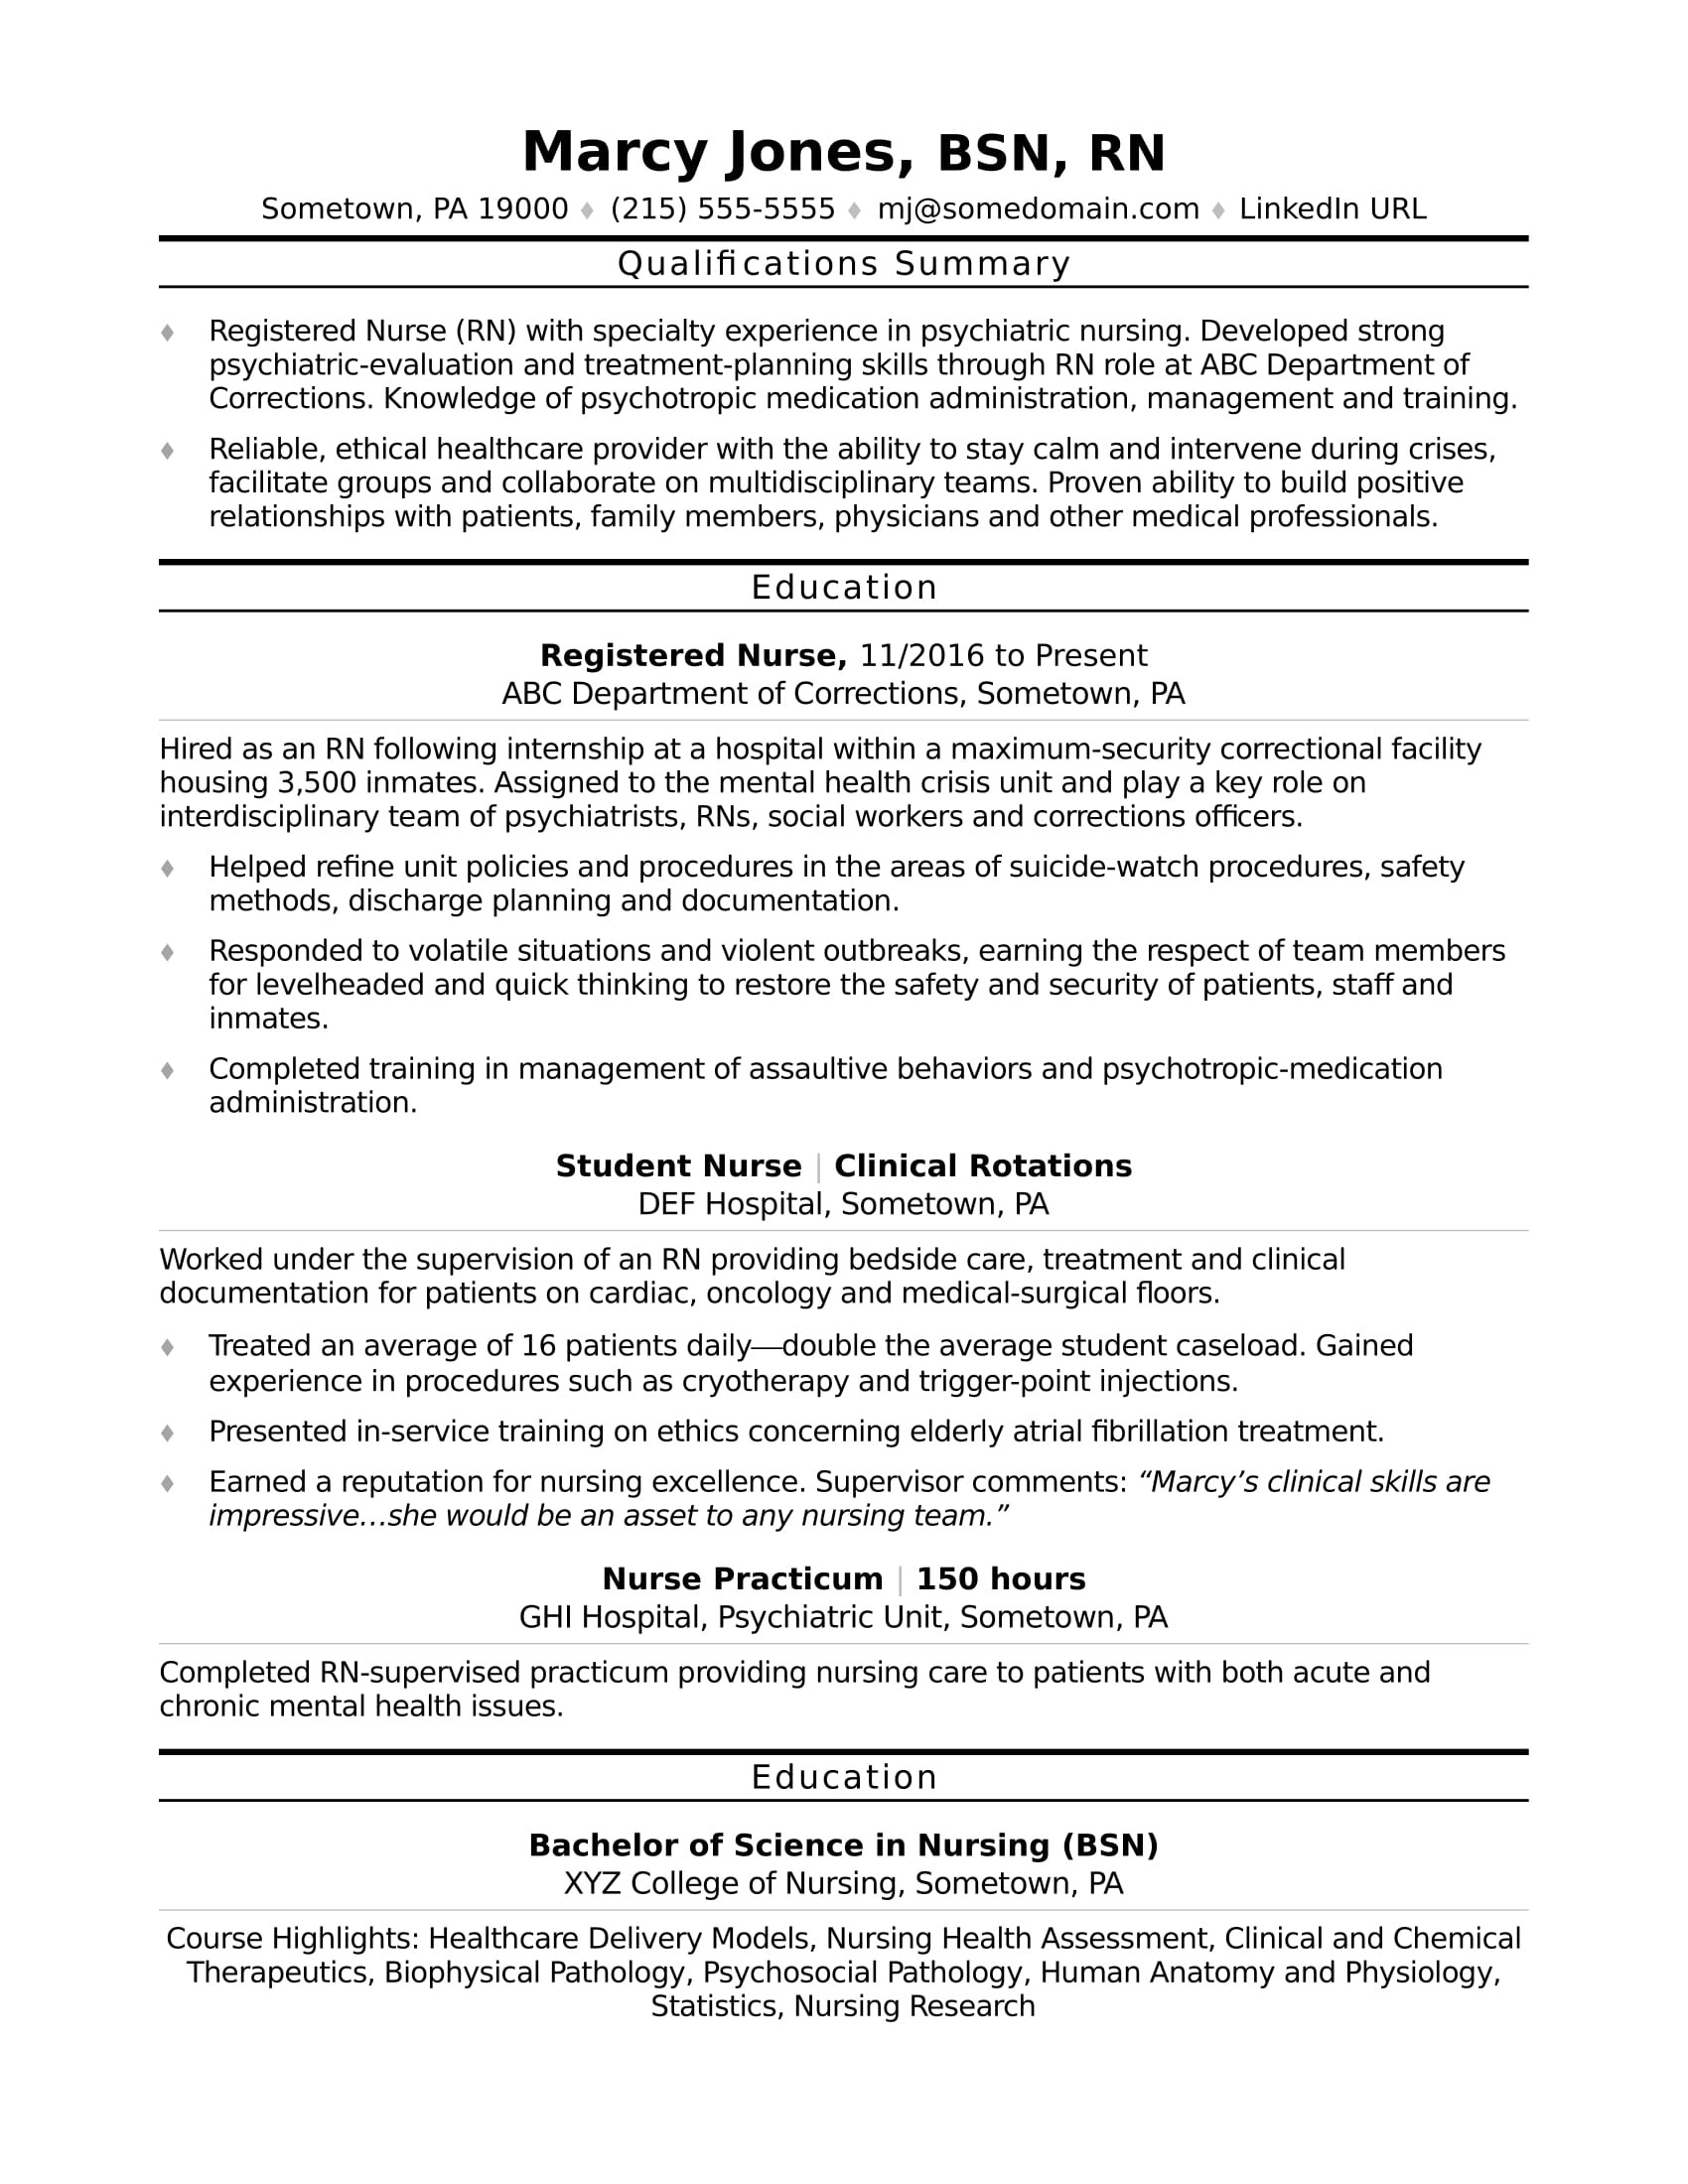 Sample Professional Summary for Nursing Resume Registered Nurse (rn) Resume Sample Monster.com